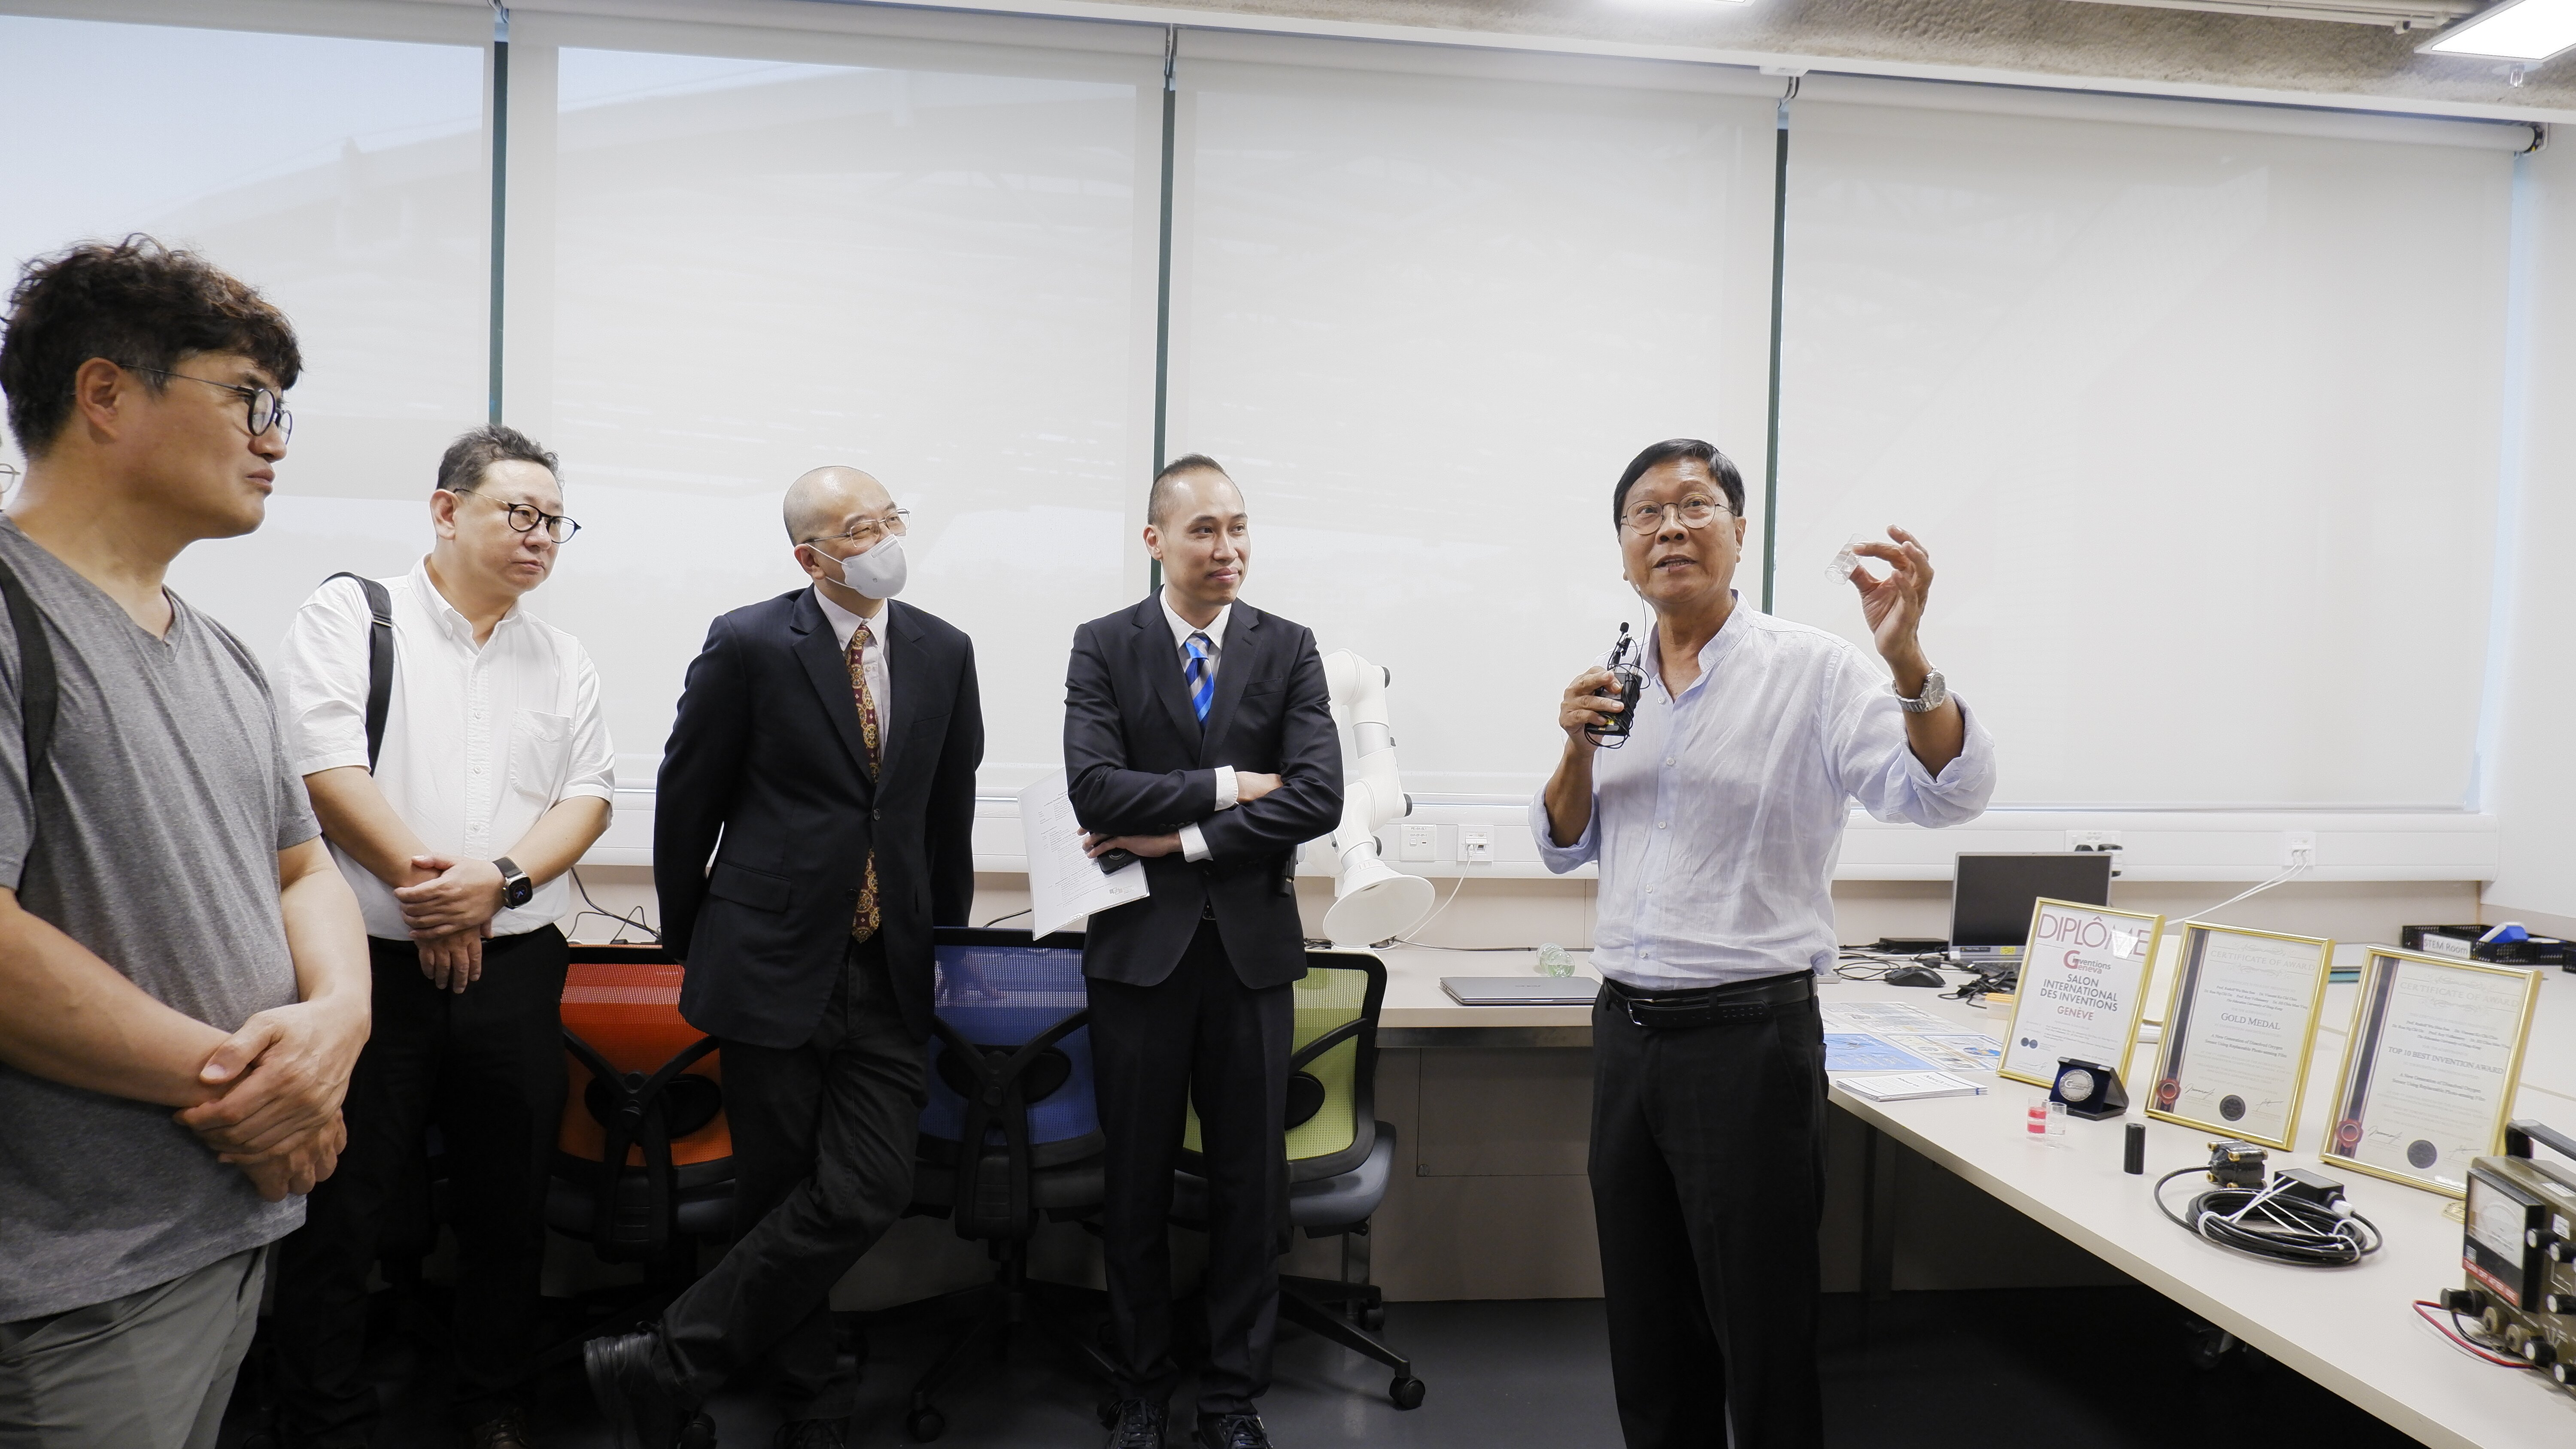 Project presentation by Professor Rudolf Wu Shiu-sun, Advisor (Environmental Science) at the Department of Science and Environmental Studies, and Chief Advisor of NerOcean Company Ltd.